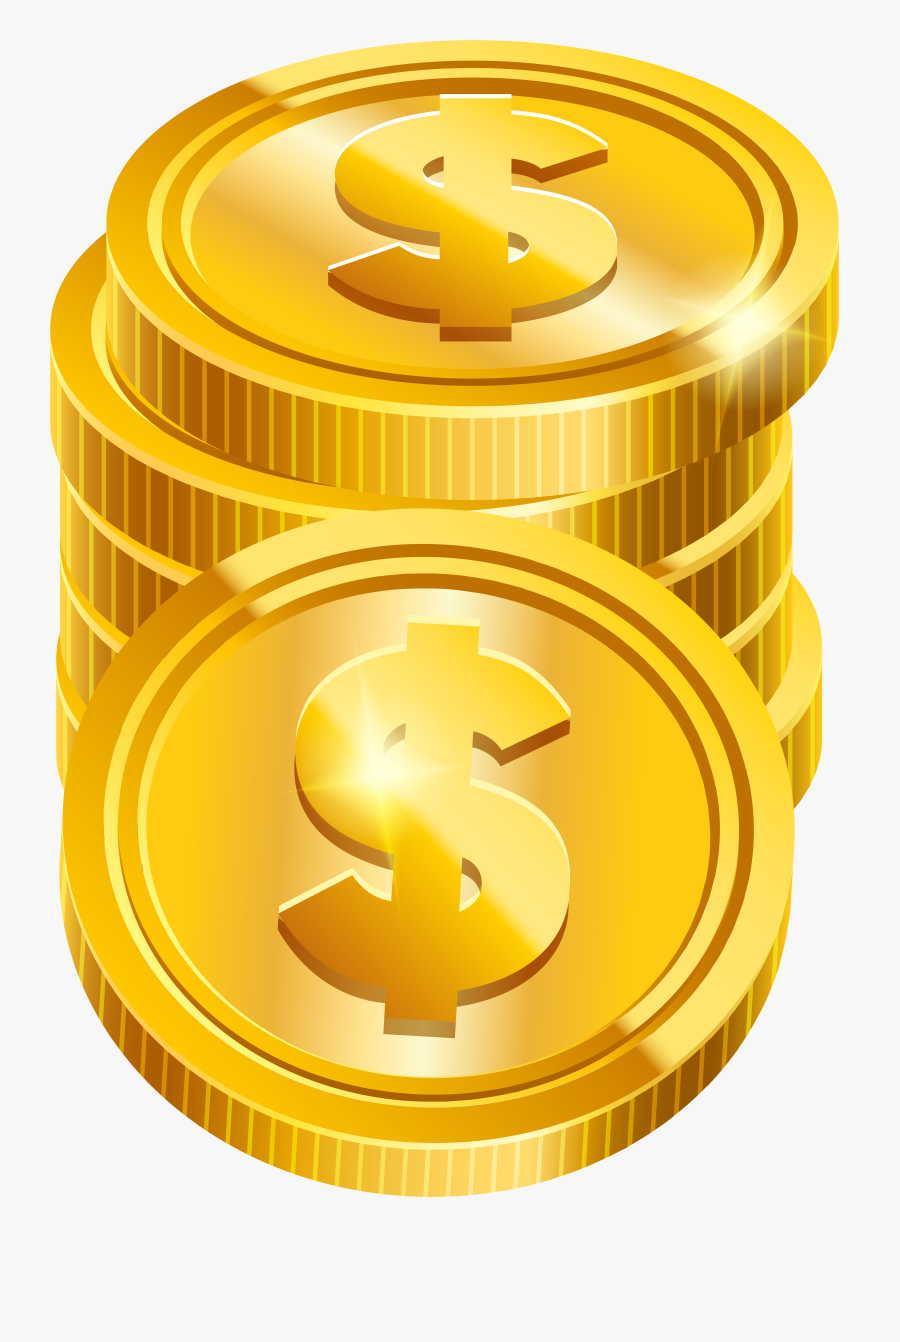 Transparent Gold Coins Clipart - Money Coin Transparent Background, Transparent Clipart